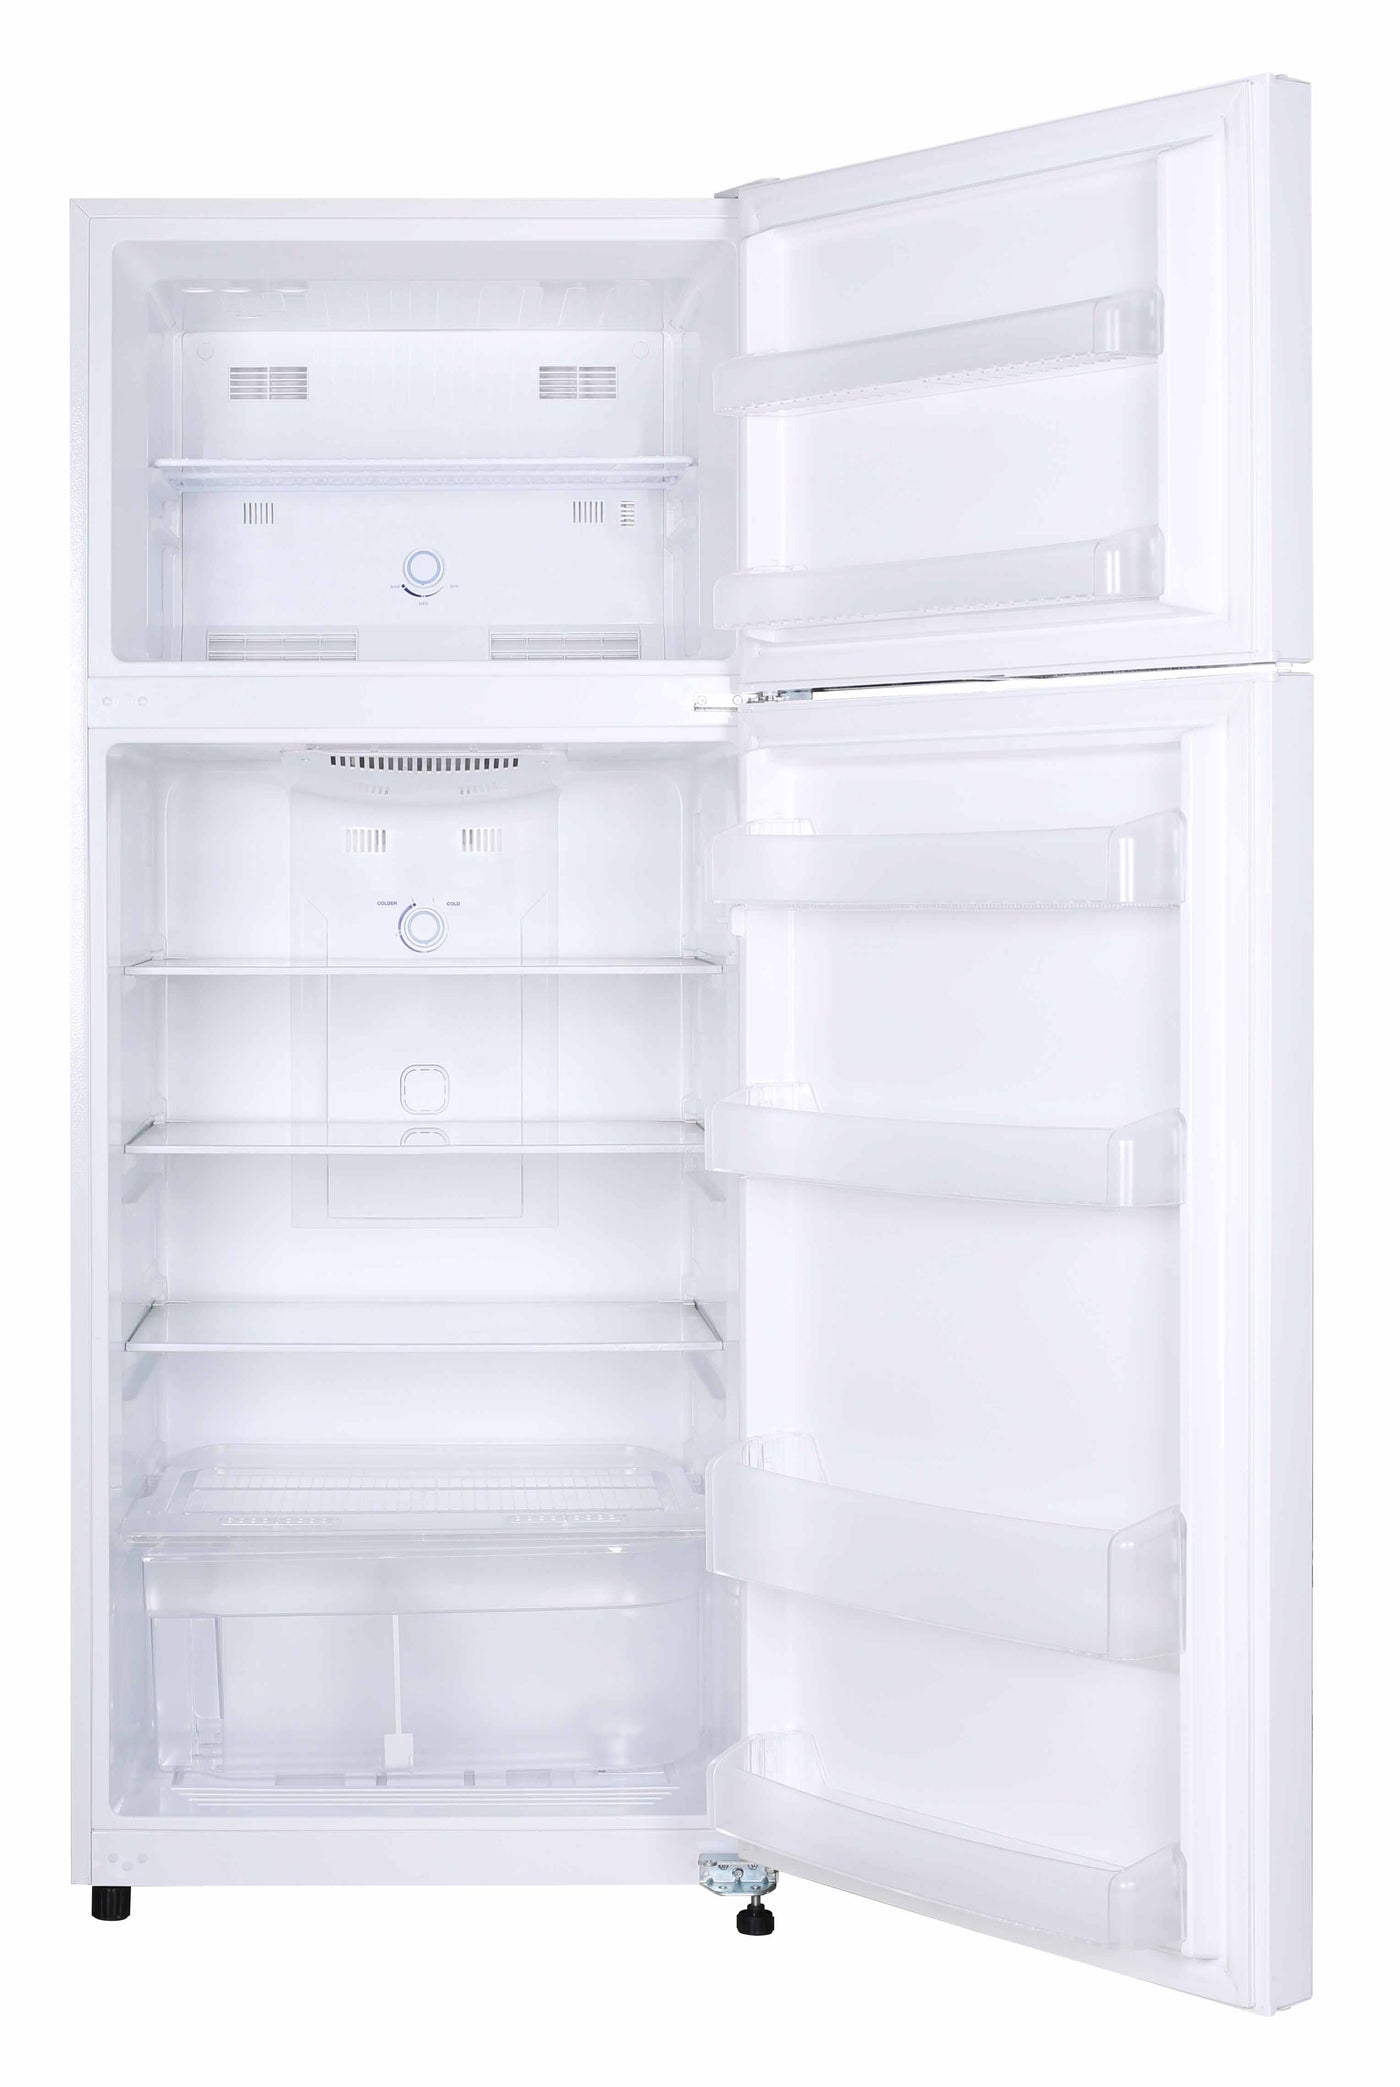 Epic 28" White Top Mount Refrigerator (14.8 cu. ft.) - EFF148W